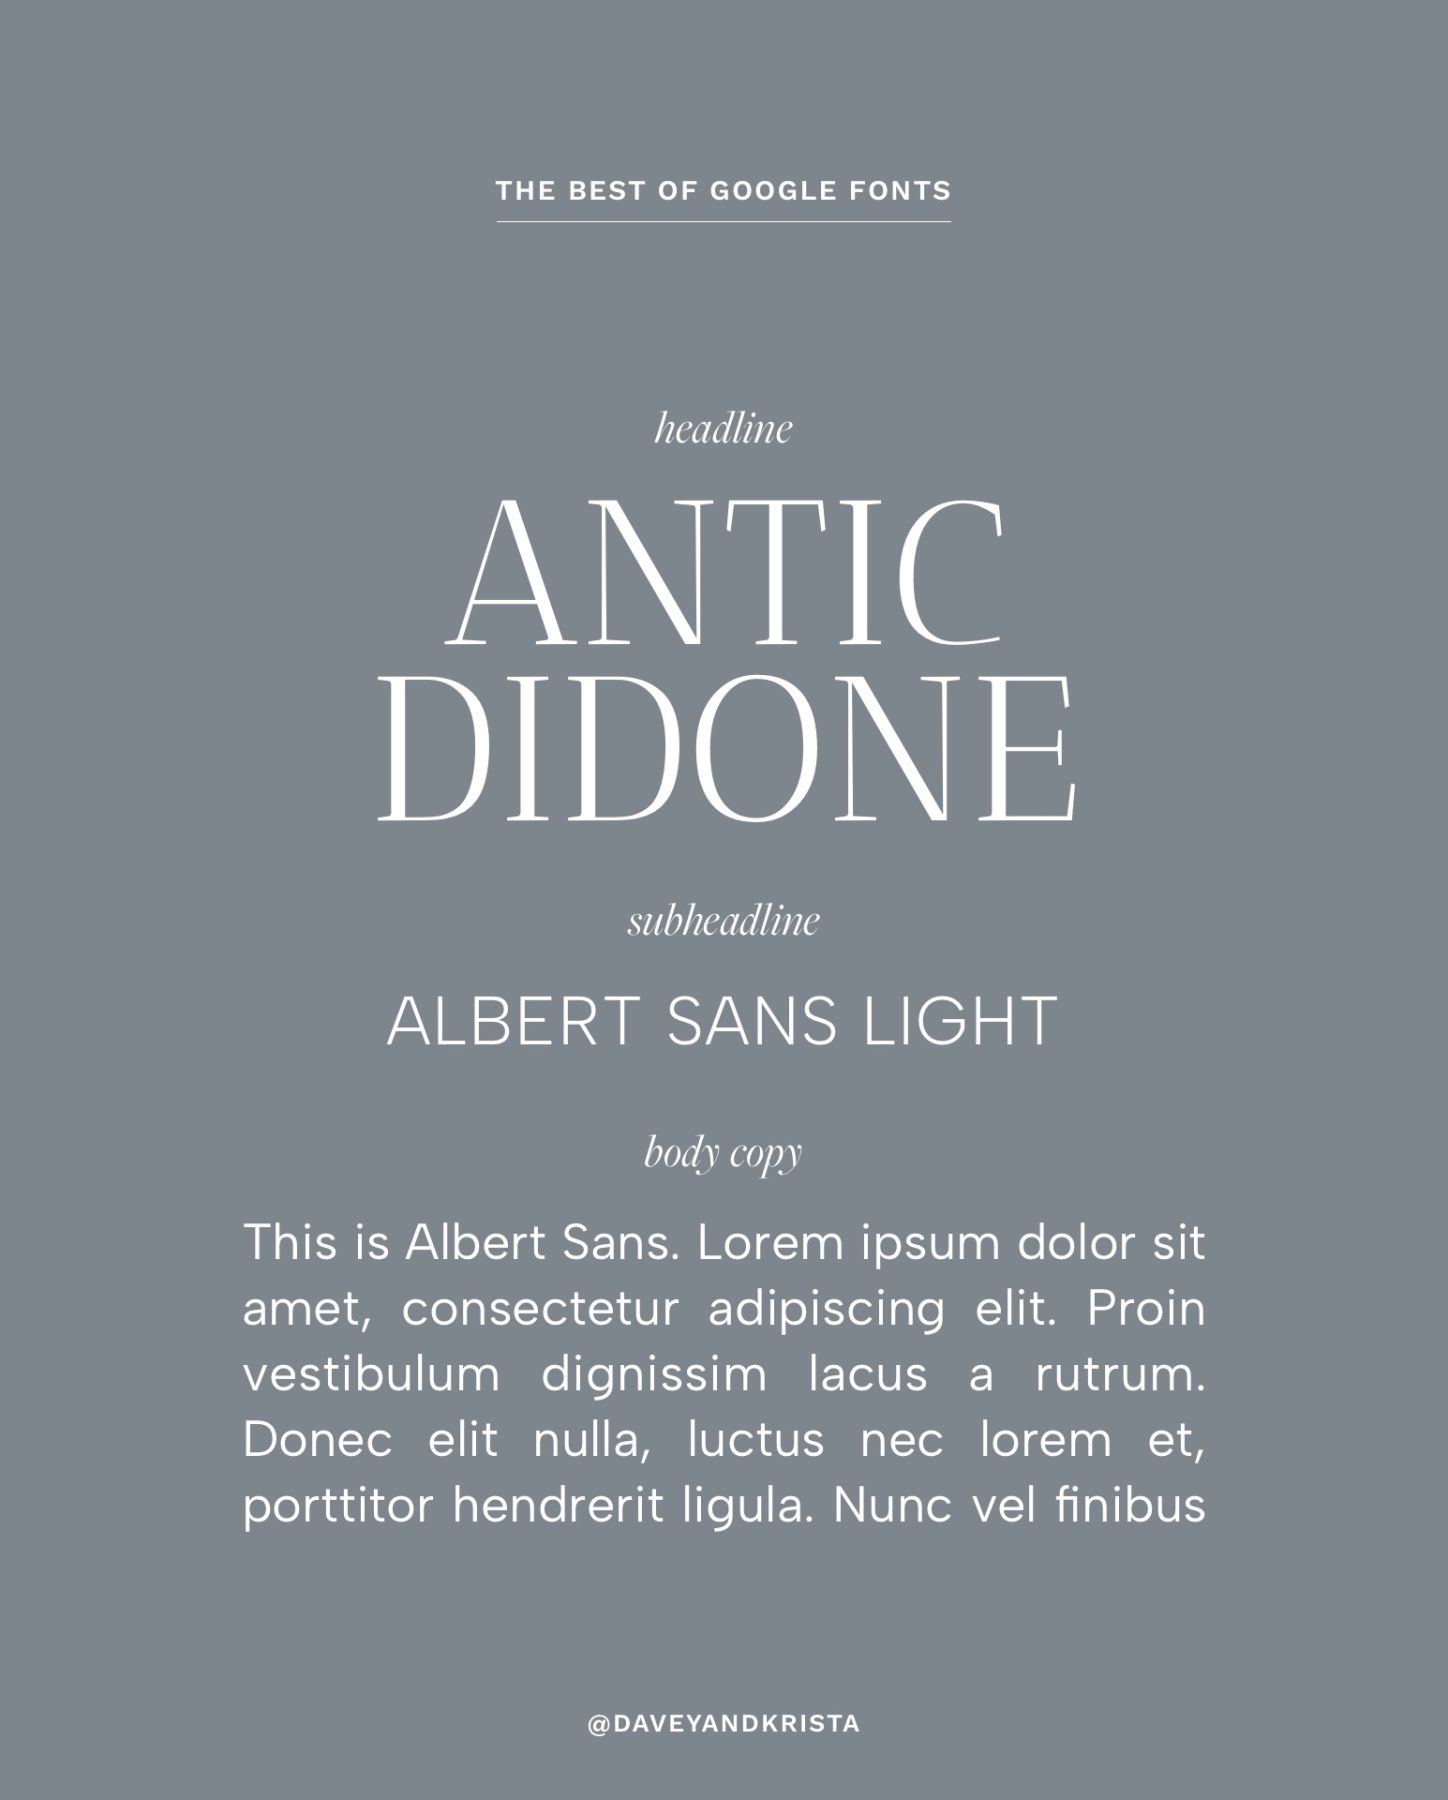 The best free Google Fonts: Antic Didone + Albert Sans Light | Via Davey & Krista
